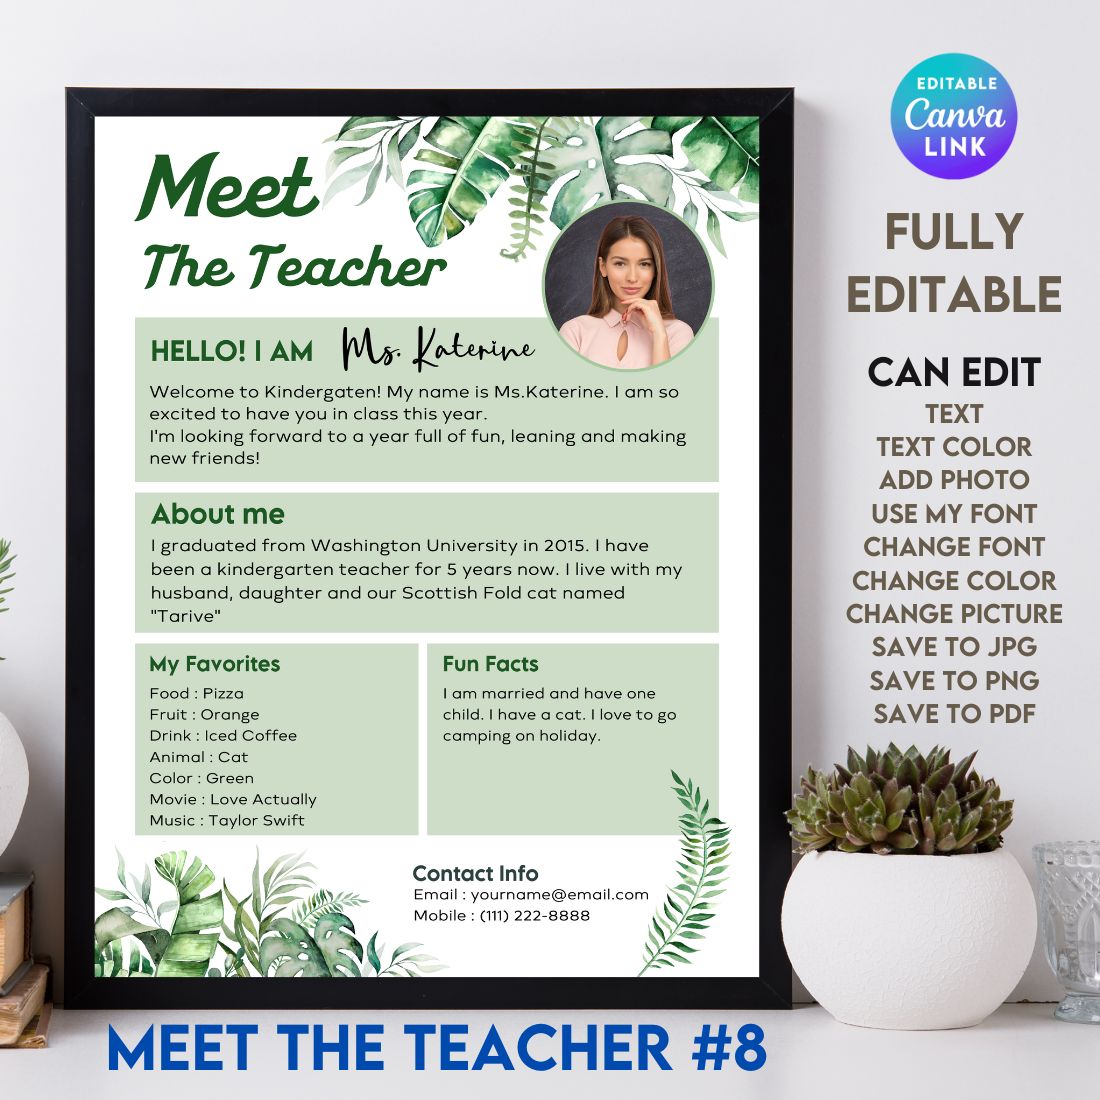 Meet The Teacher #8 – Canva Template cover image.